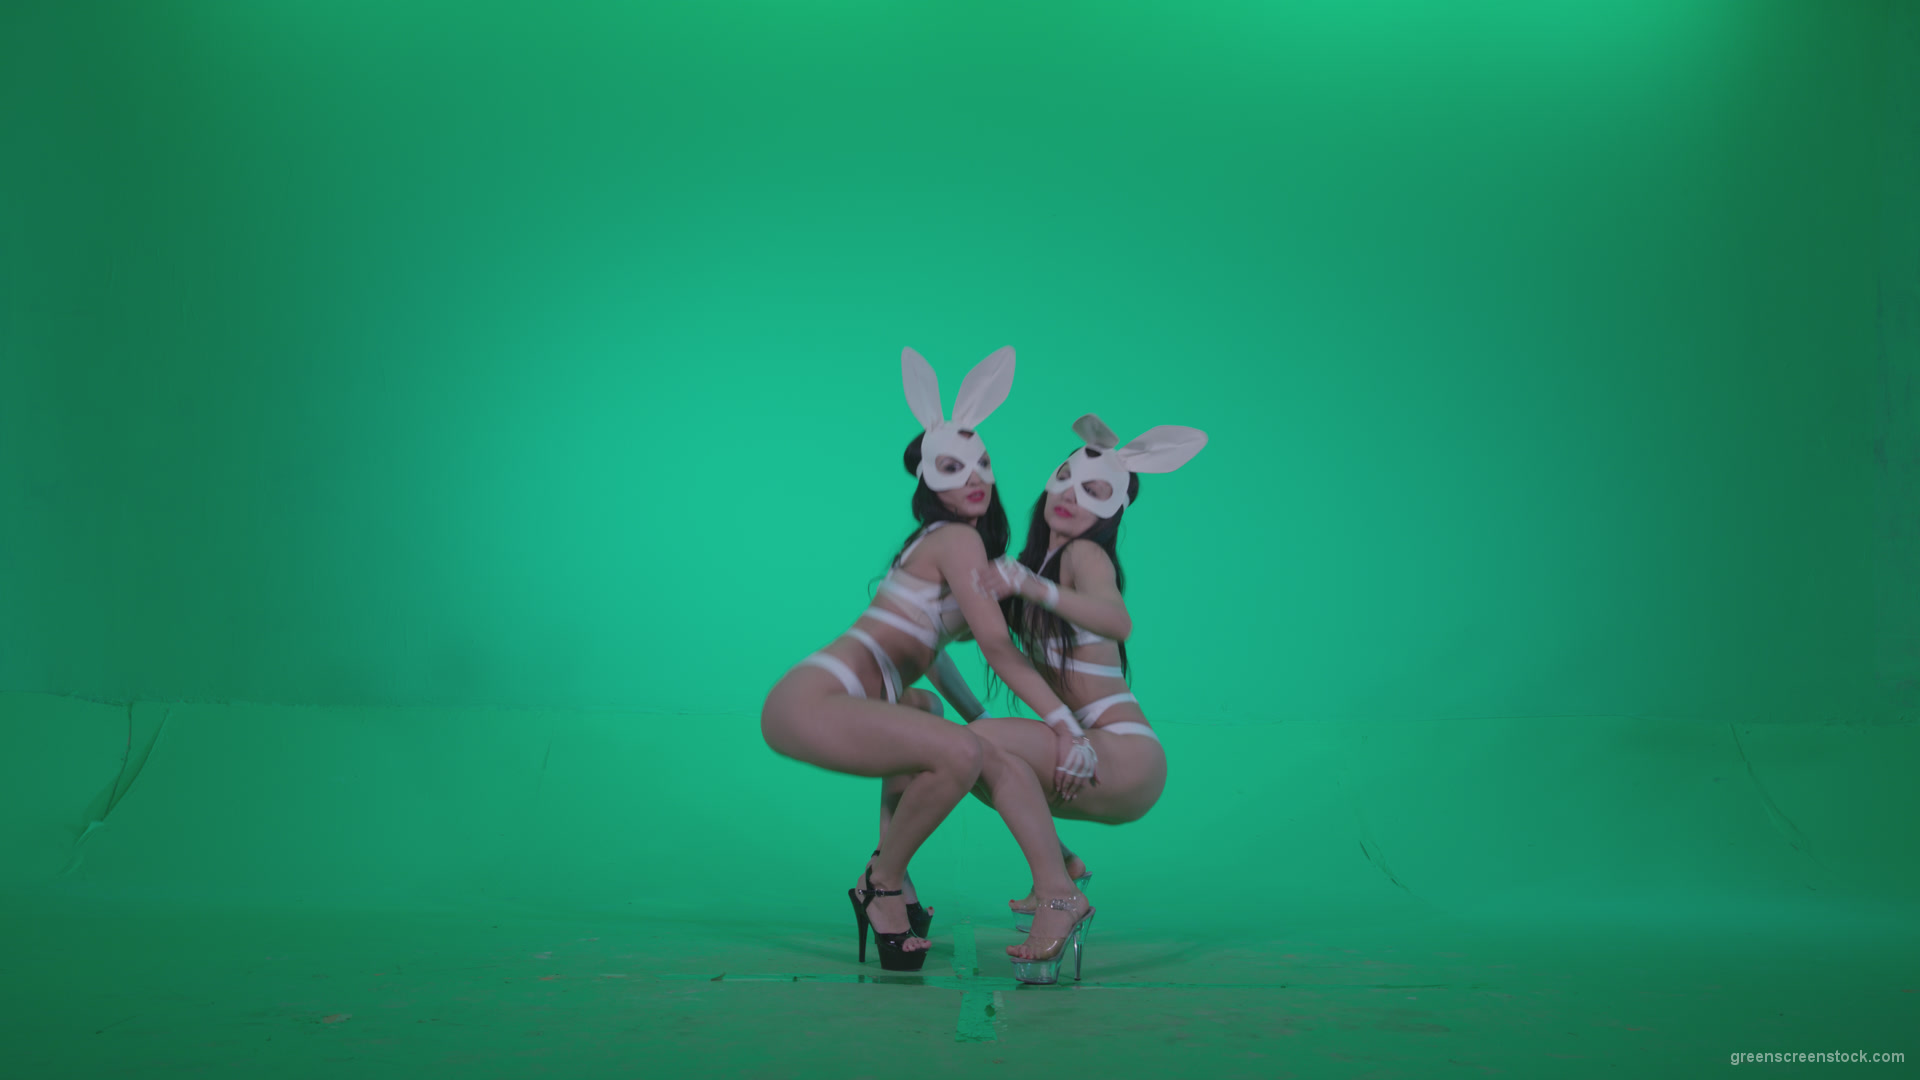 Go-go-Dancer-White-Rabbit-m4-Green-Screen-Video-Footage_005 Green Screen Stock